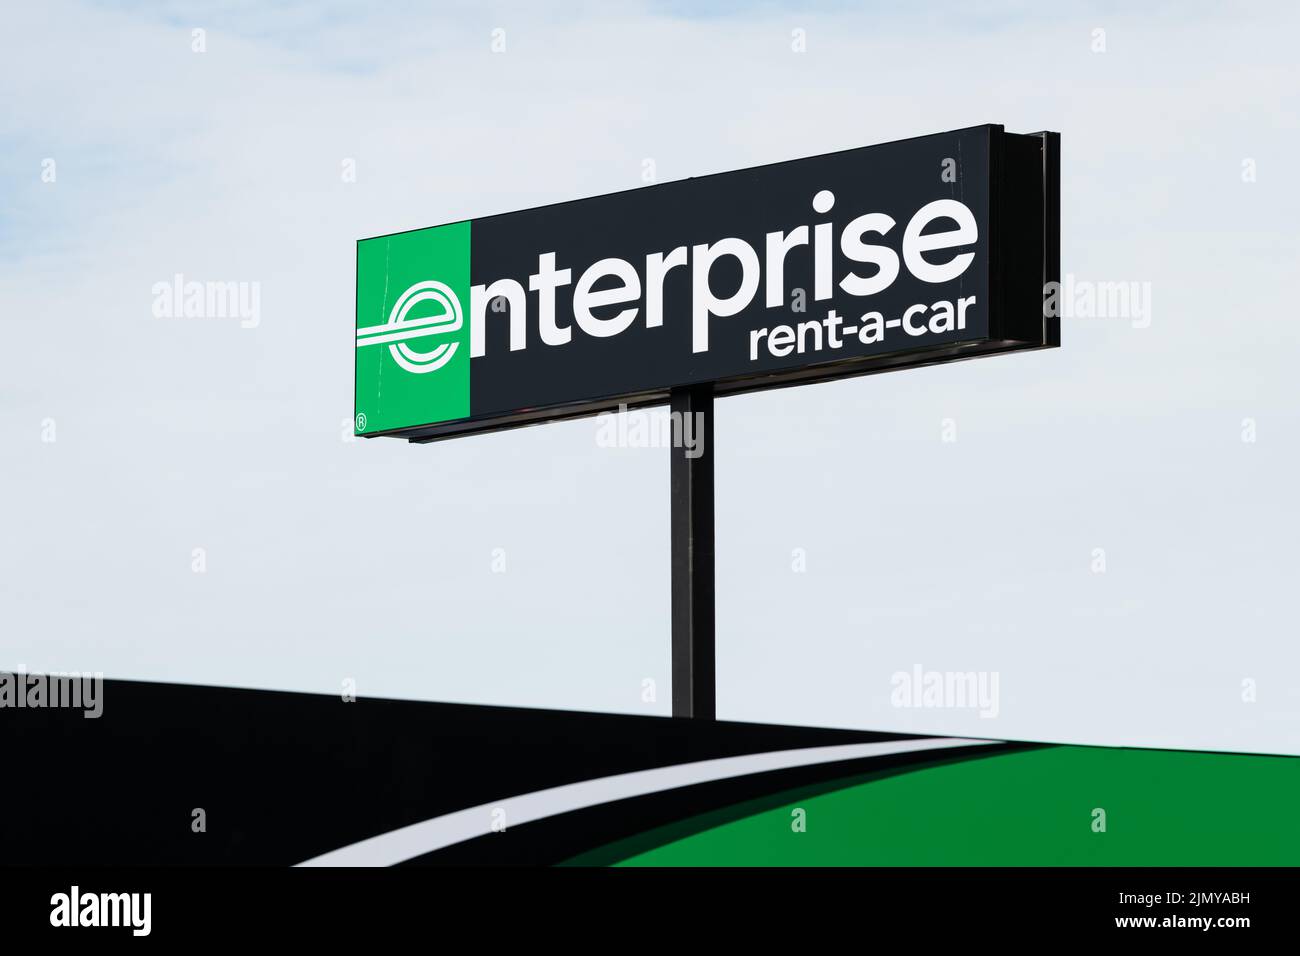 Enterprise rent-car-sign Stock Photo